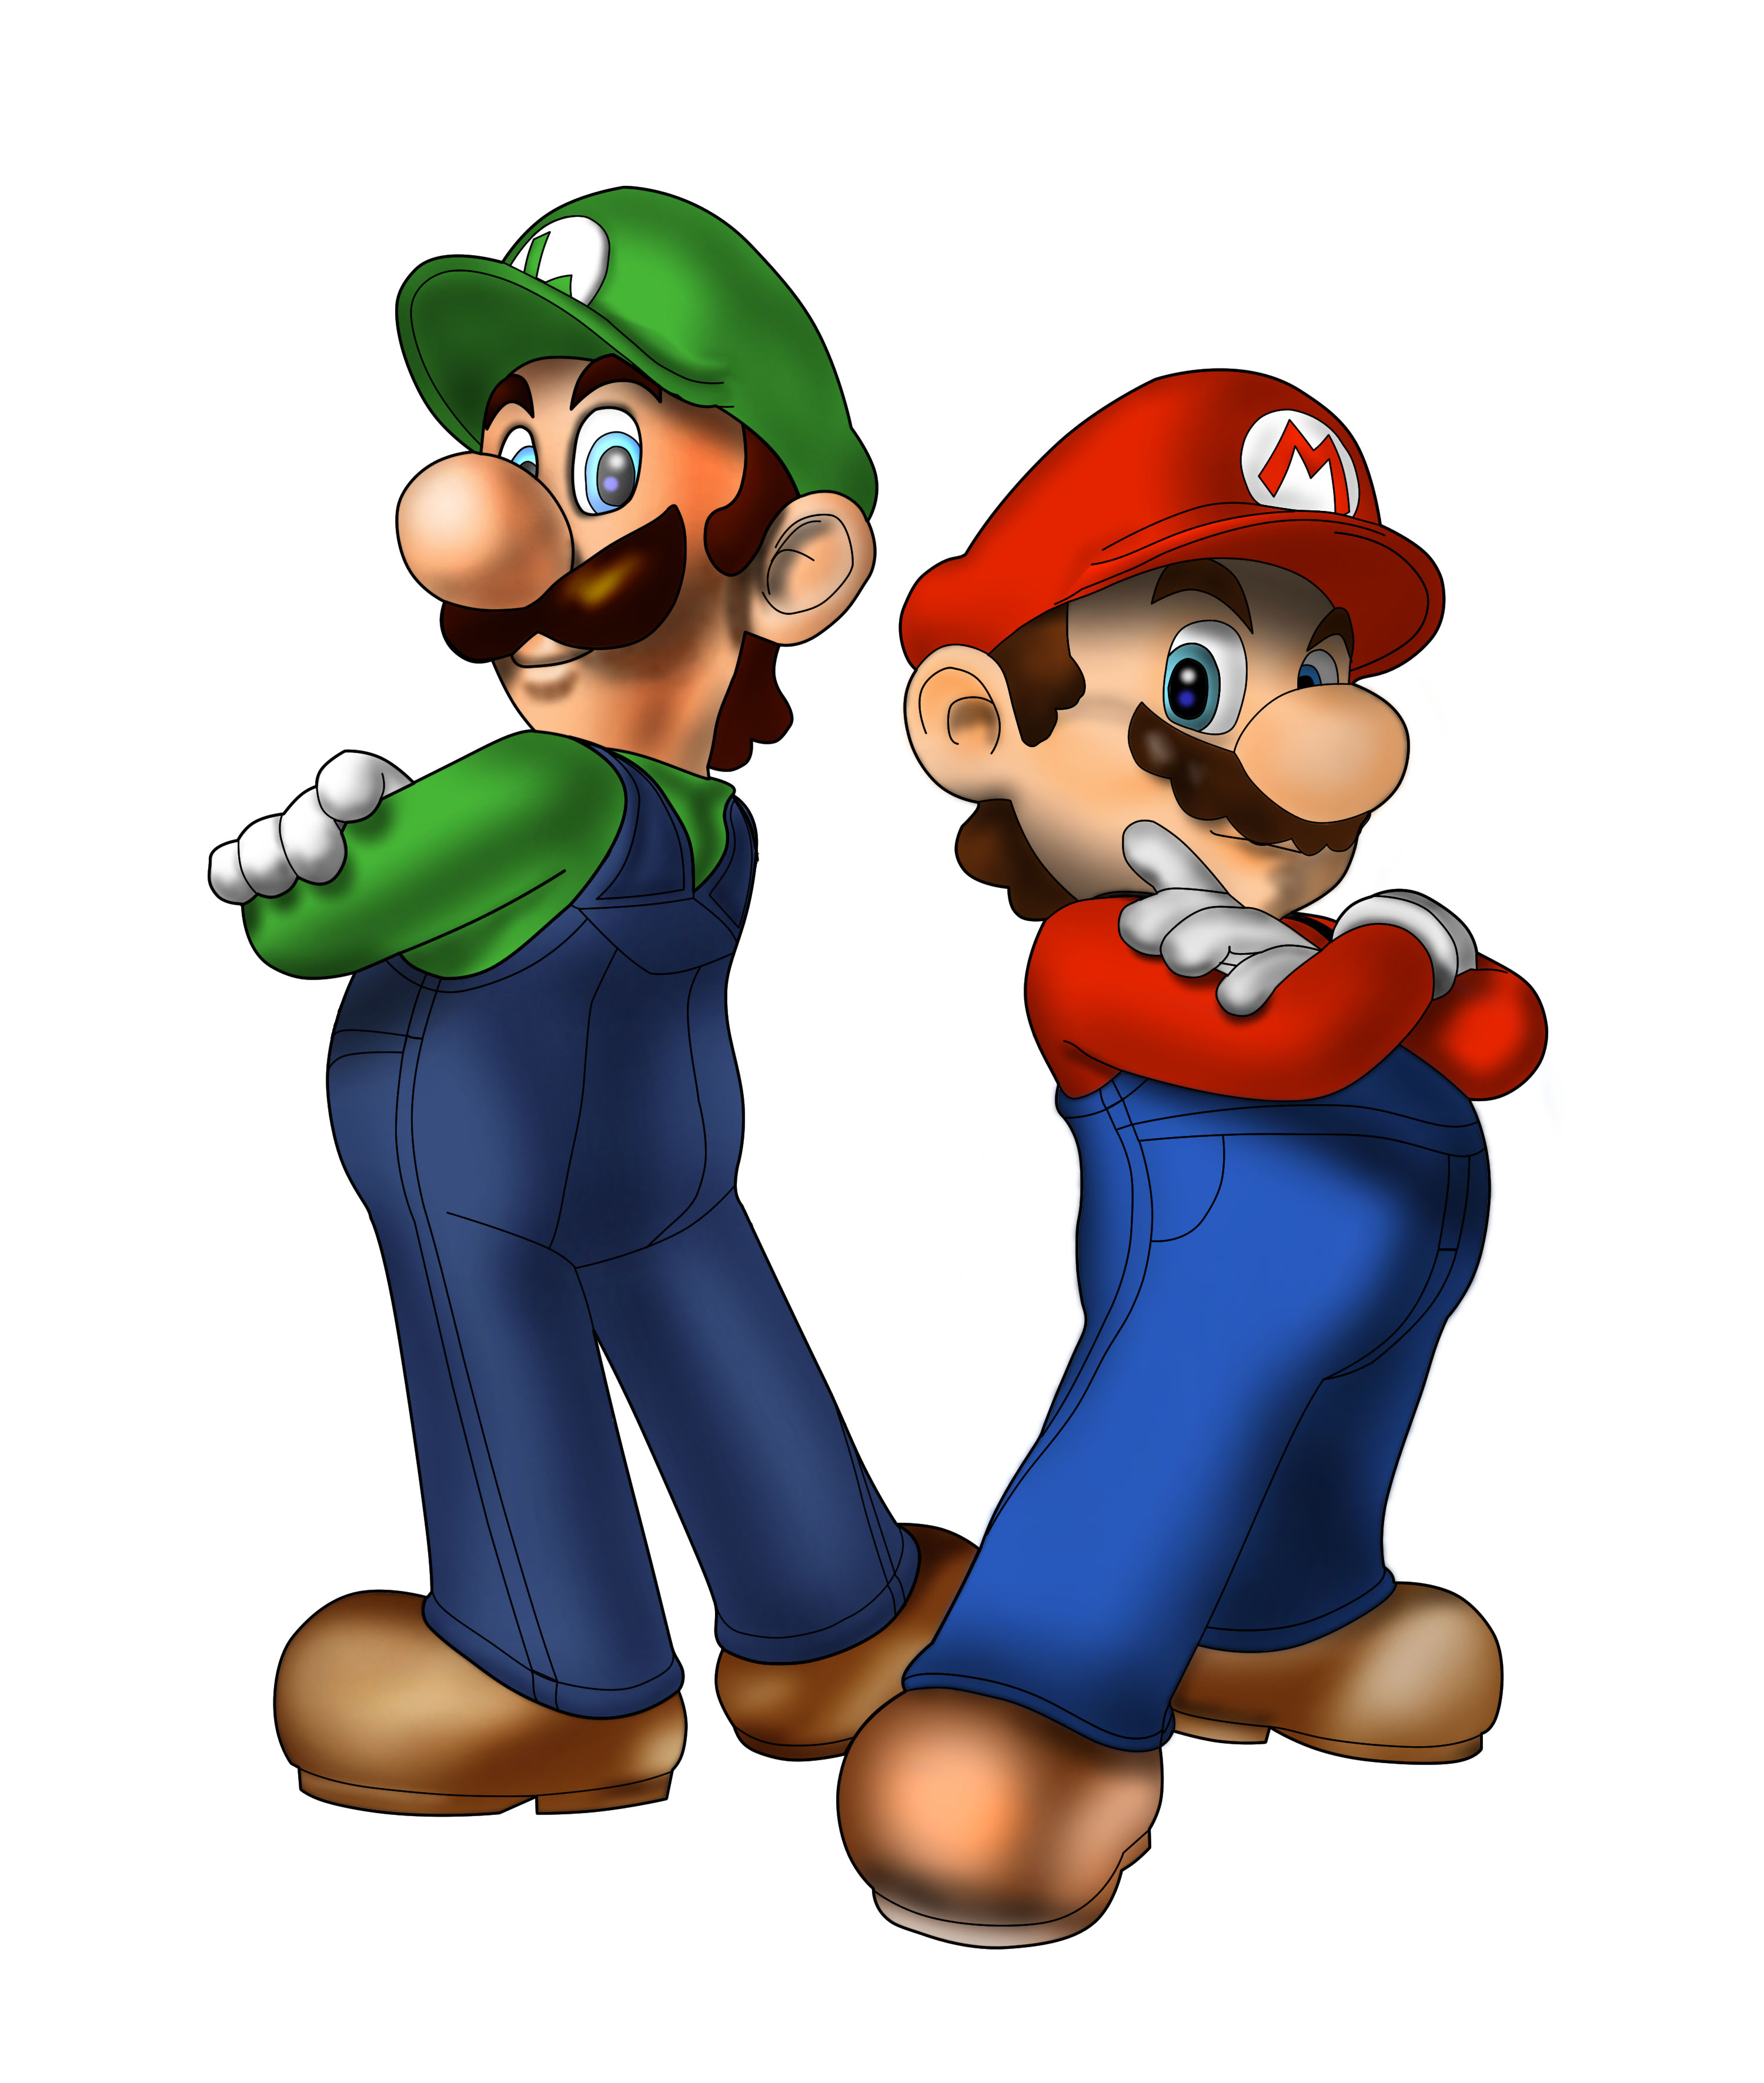 800x687px » Mario And Luigi Wallpapers